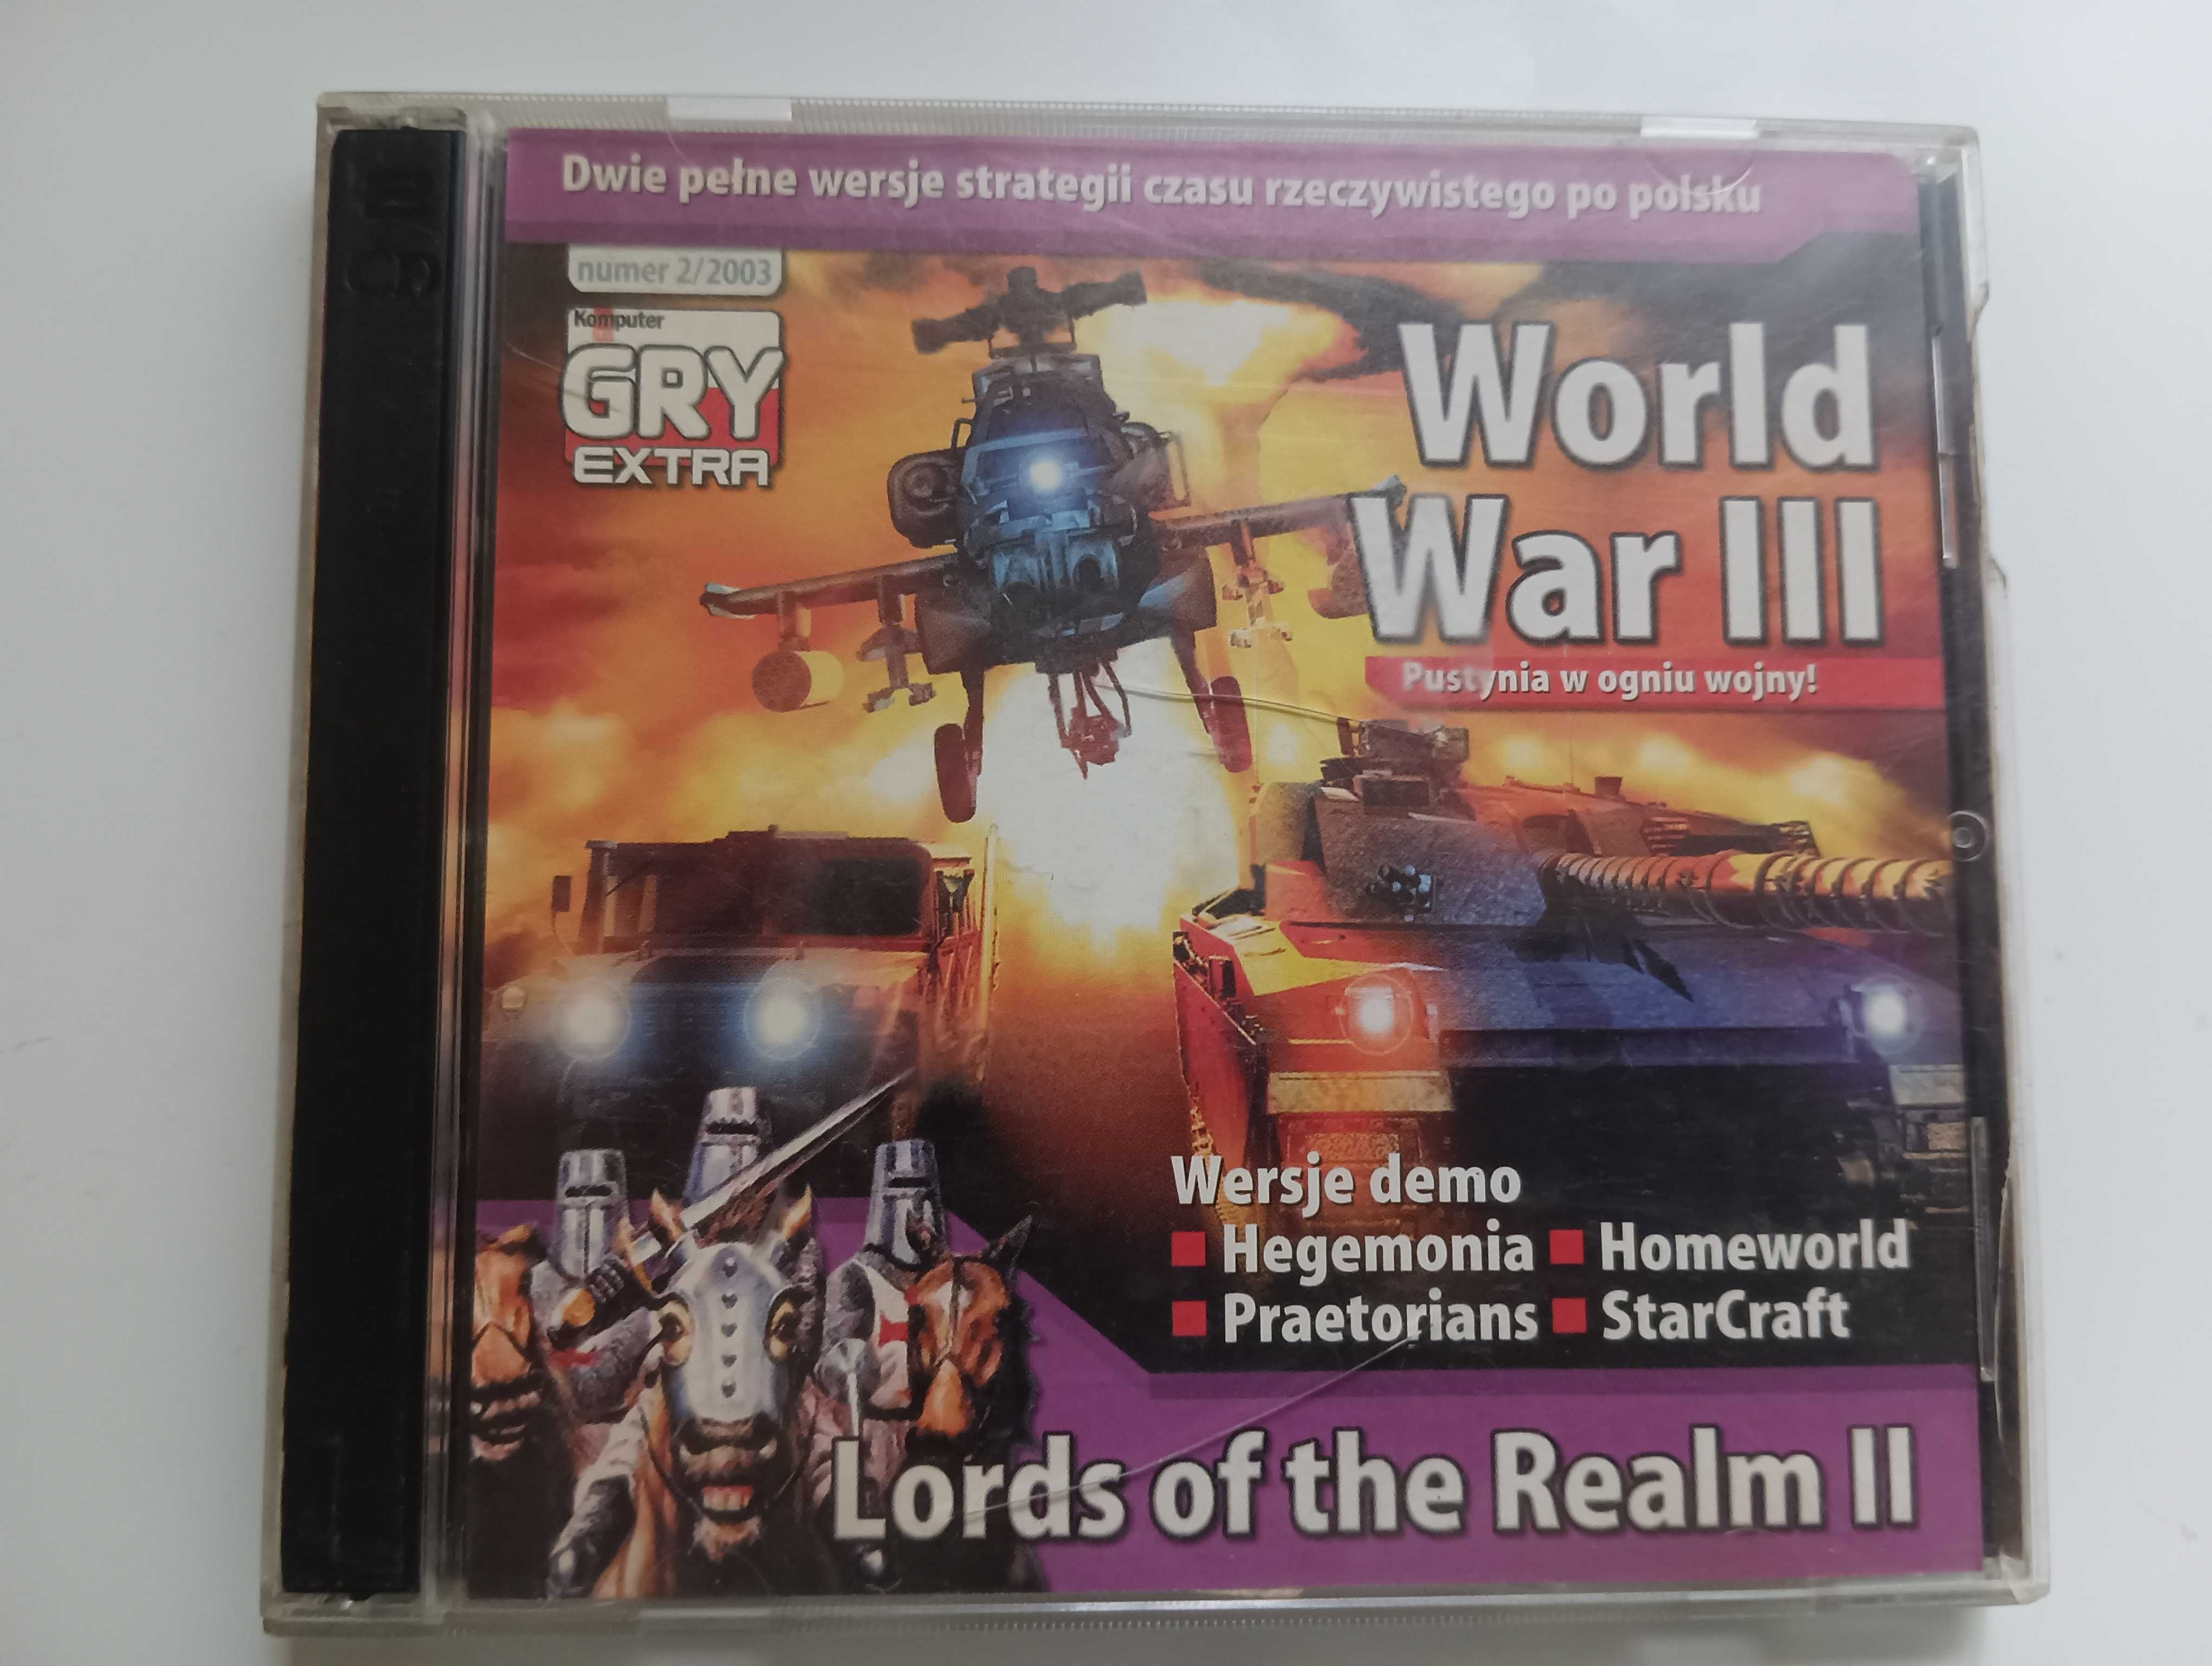 World War III + Lords of the Realm II